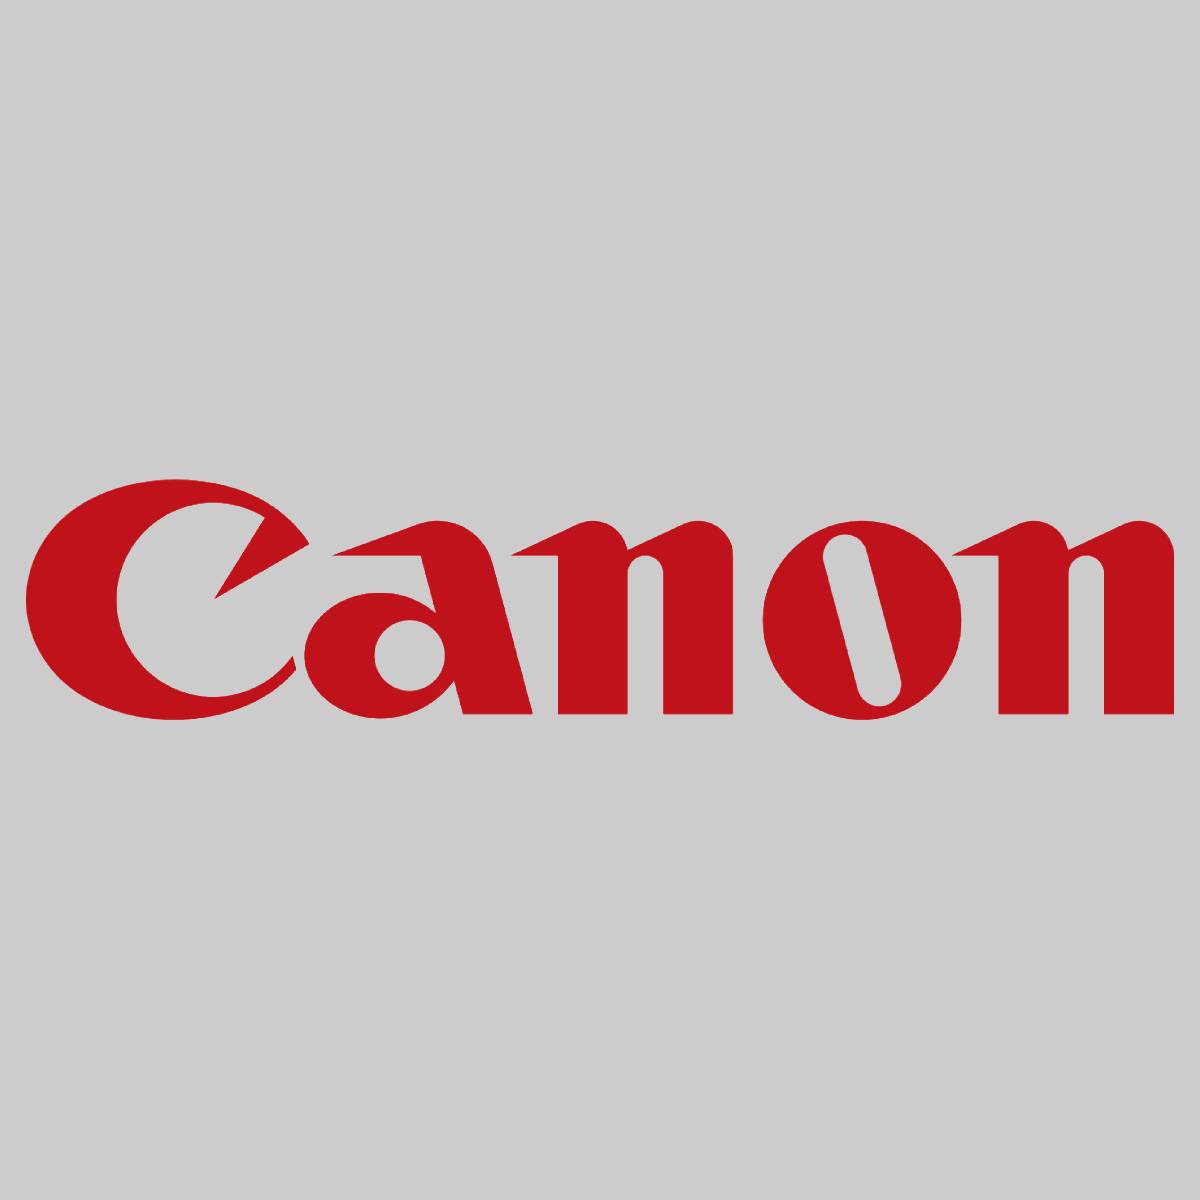 "Original Canon Deck Controller PCB Assy FM1-P880-000